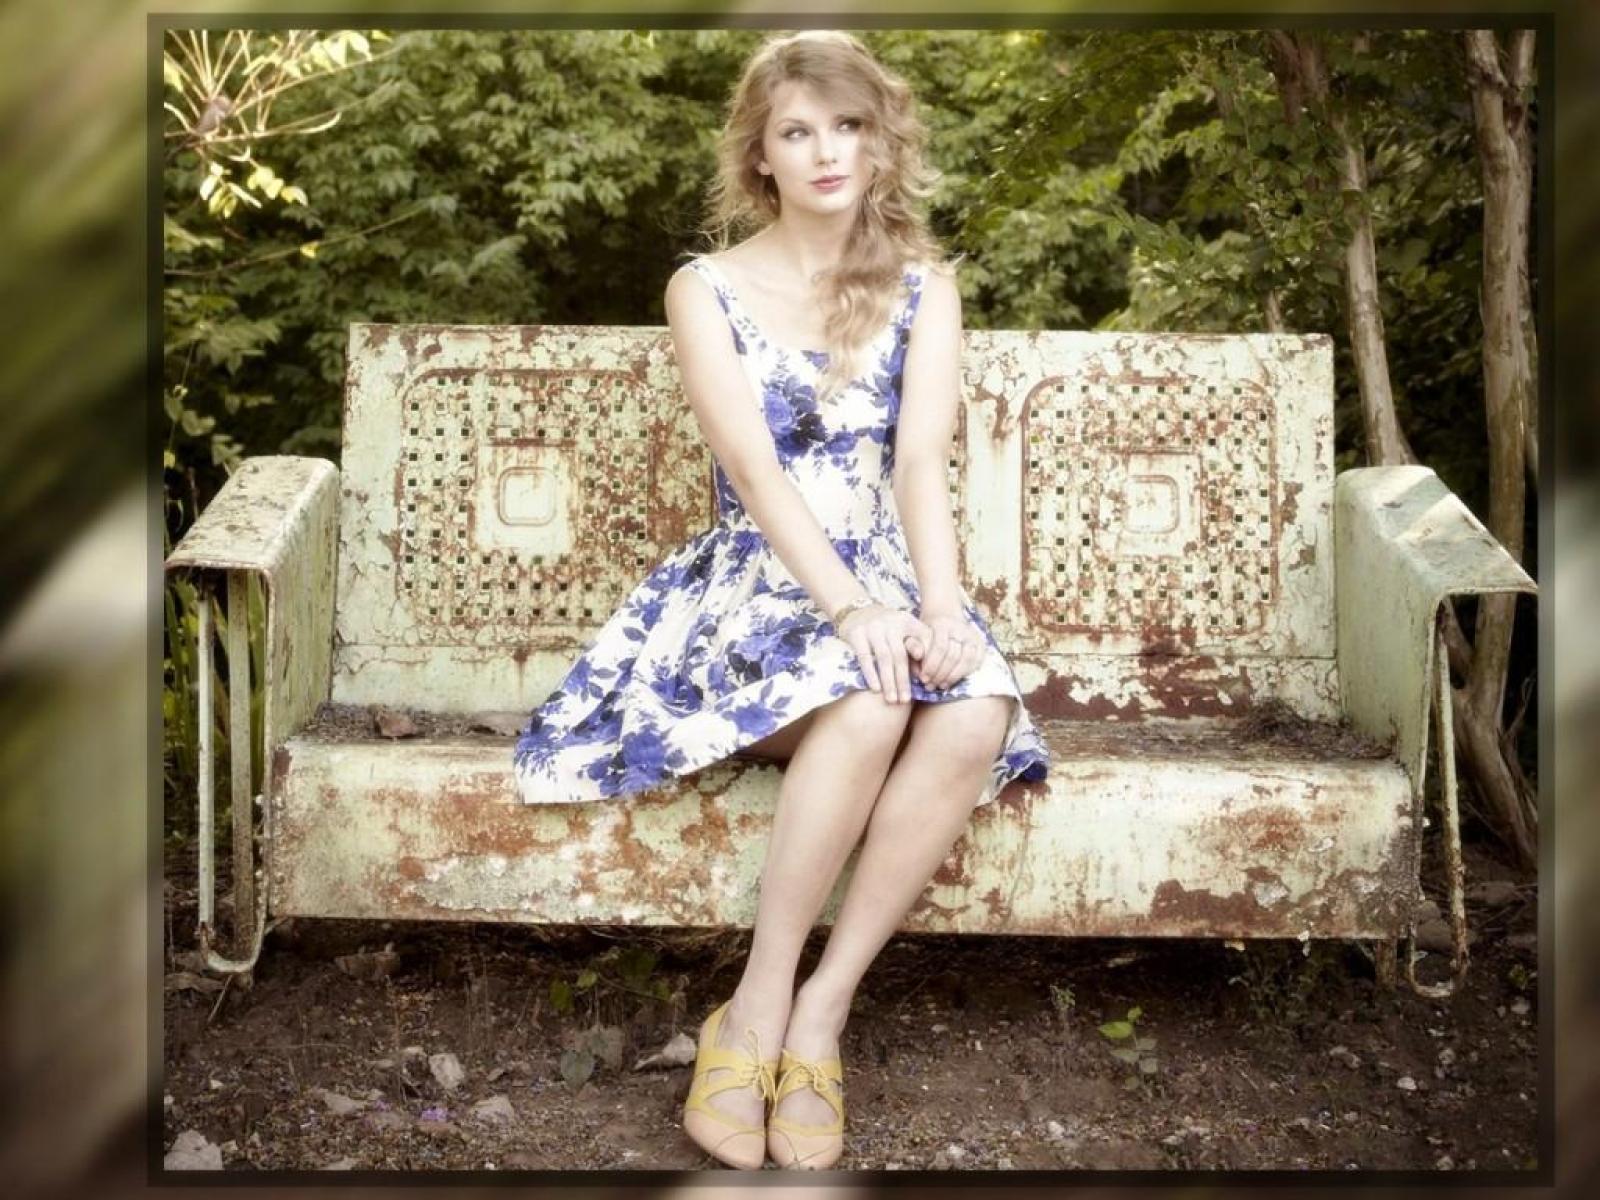 Taylor Swift Country Pop Singer widescreen wallpaper. Wide